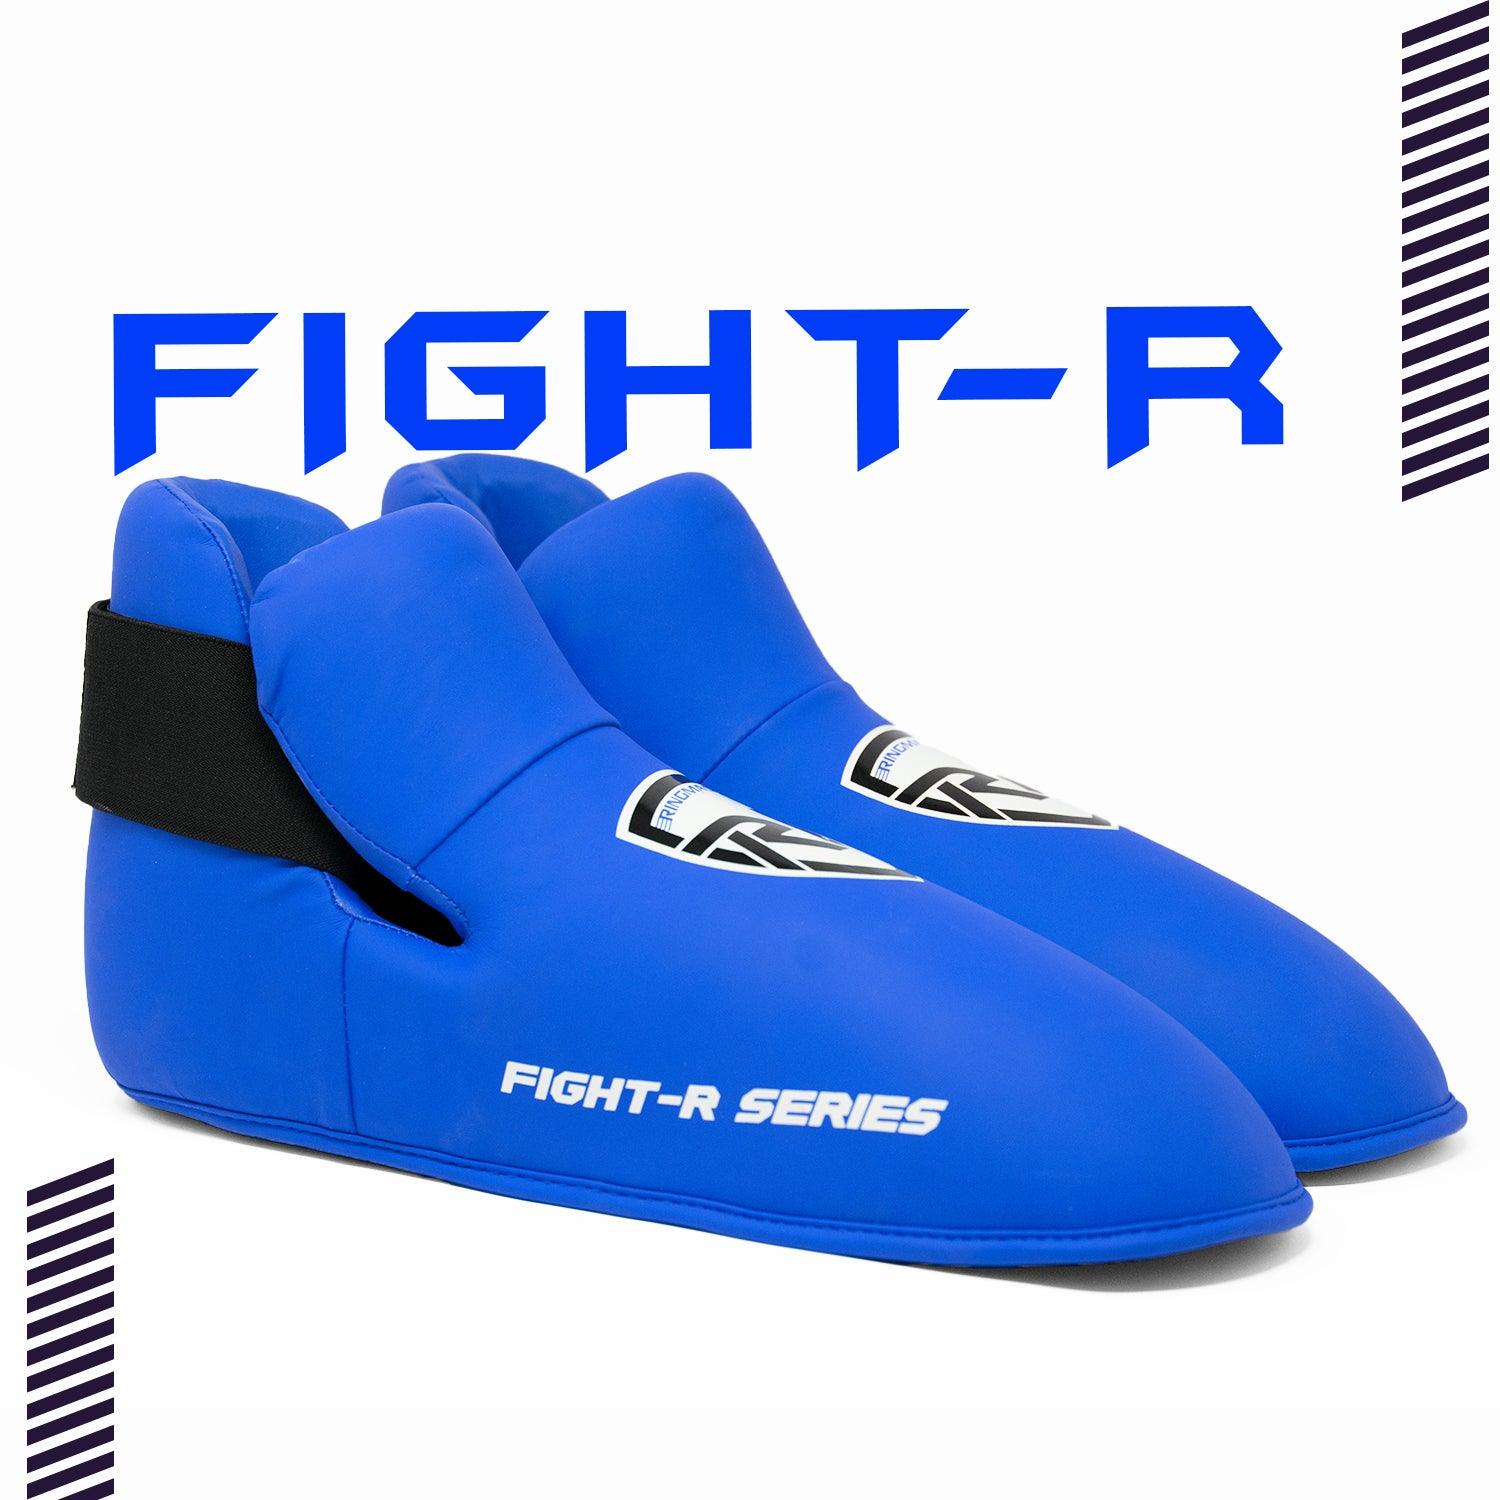 RingMaster Sports Semi Contact Point Foot Protector Taekwondo Kickboxing K1 Blue - RINGMASTER SPORTS - Made For Champions